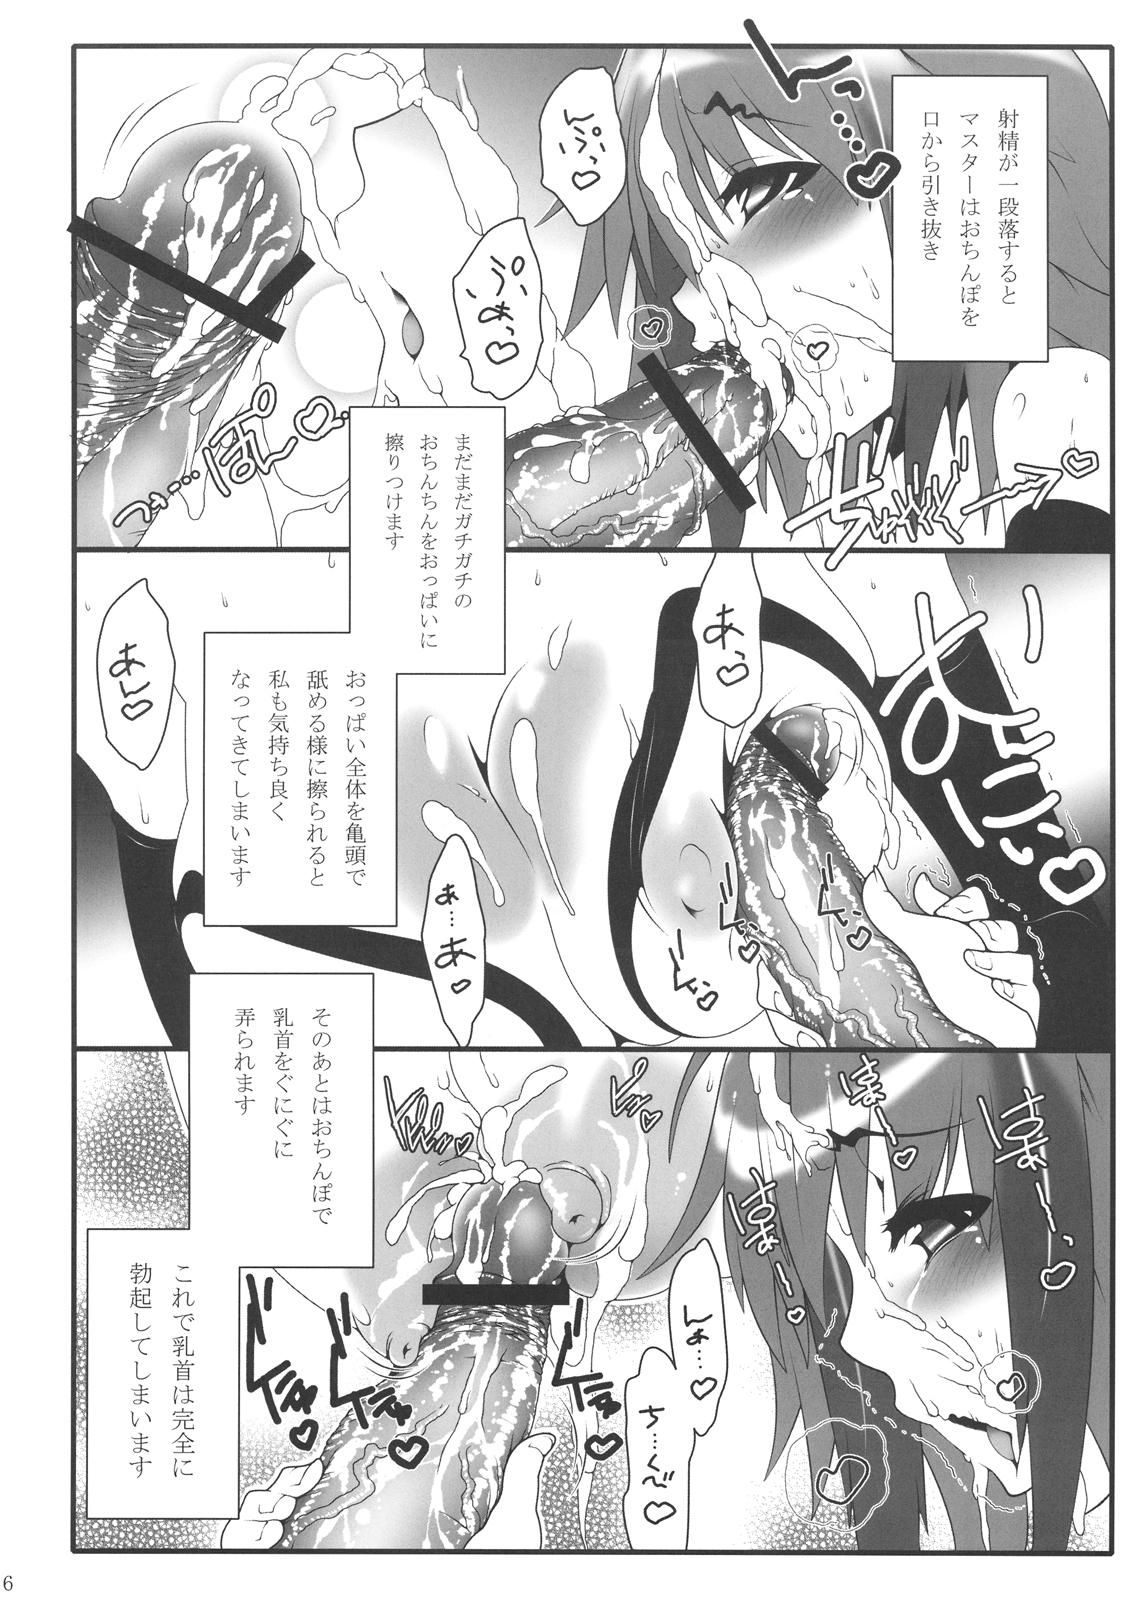 Ex Girlfriend Ikaros-san to. - Sora no otoshimono Nalgas - Page 6